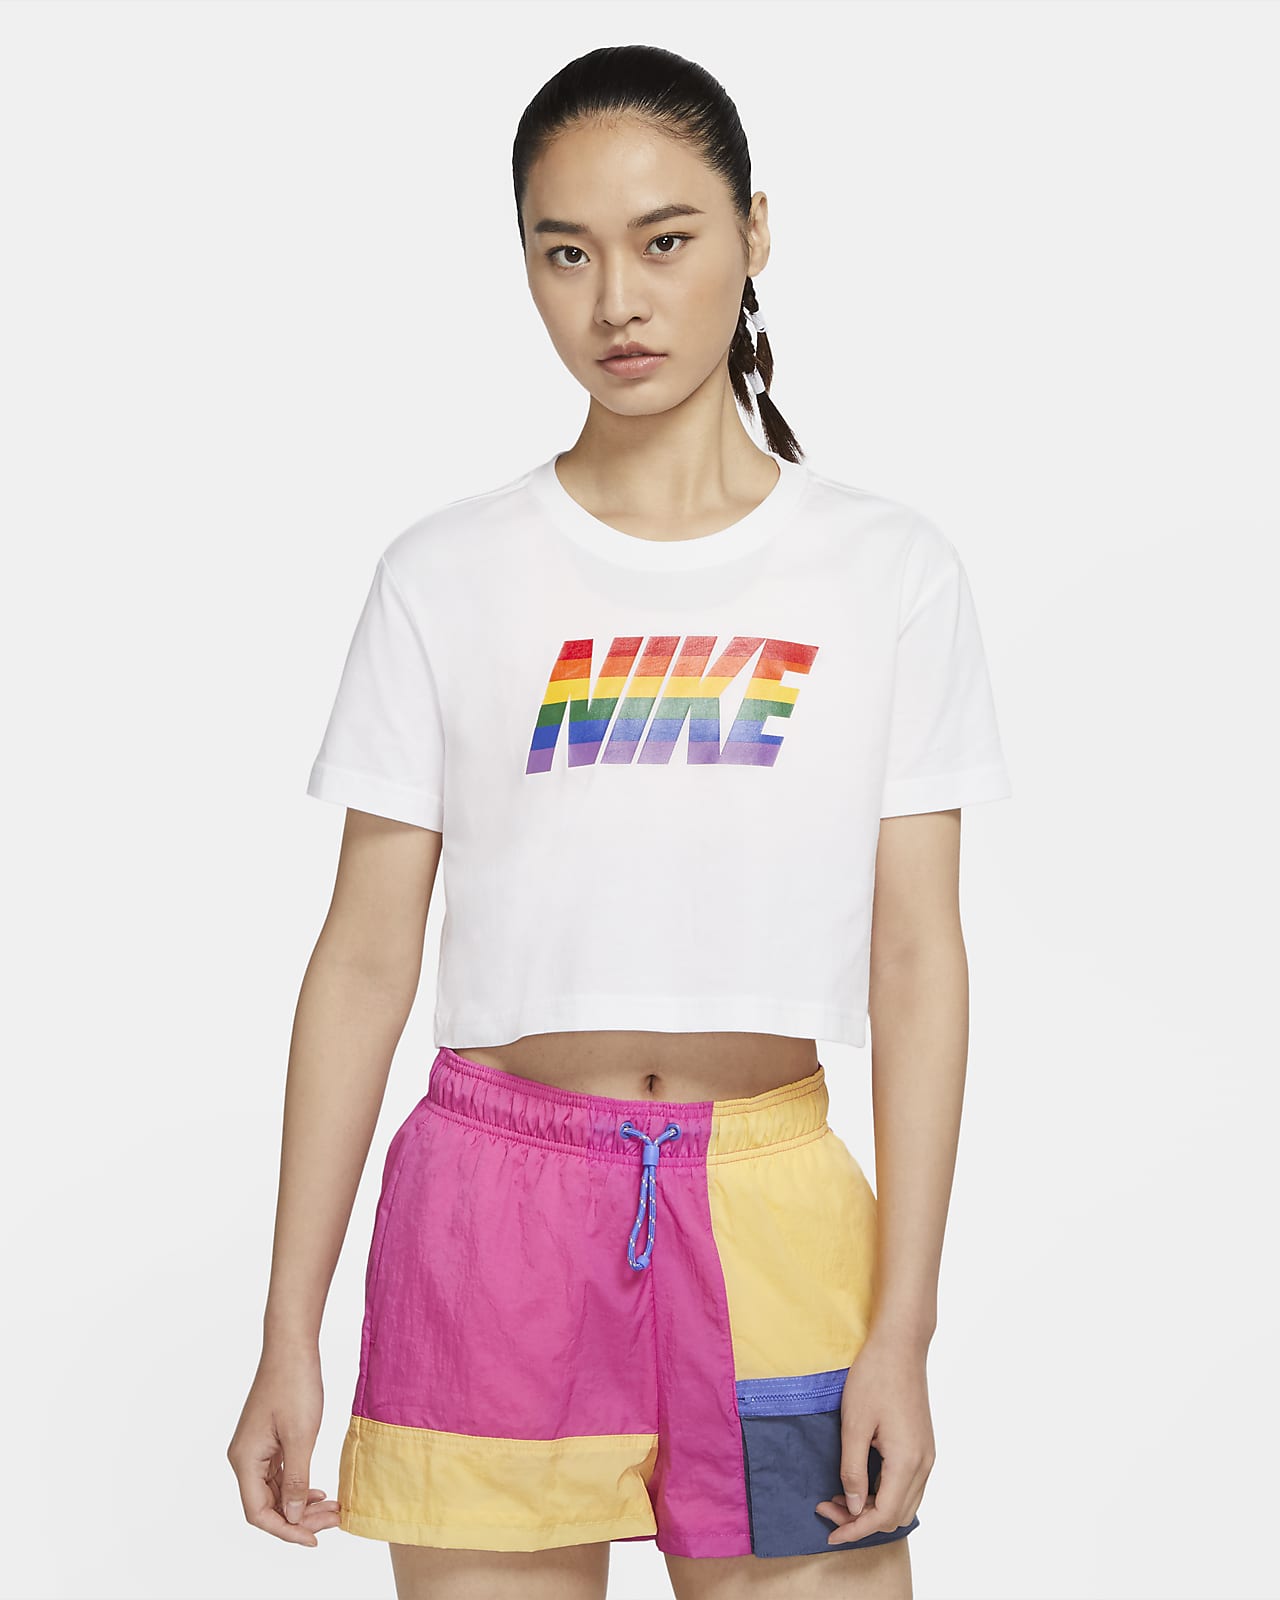 Womens Tops & T-Shirts. Nike JP